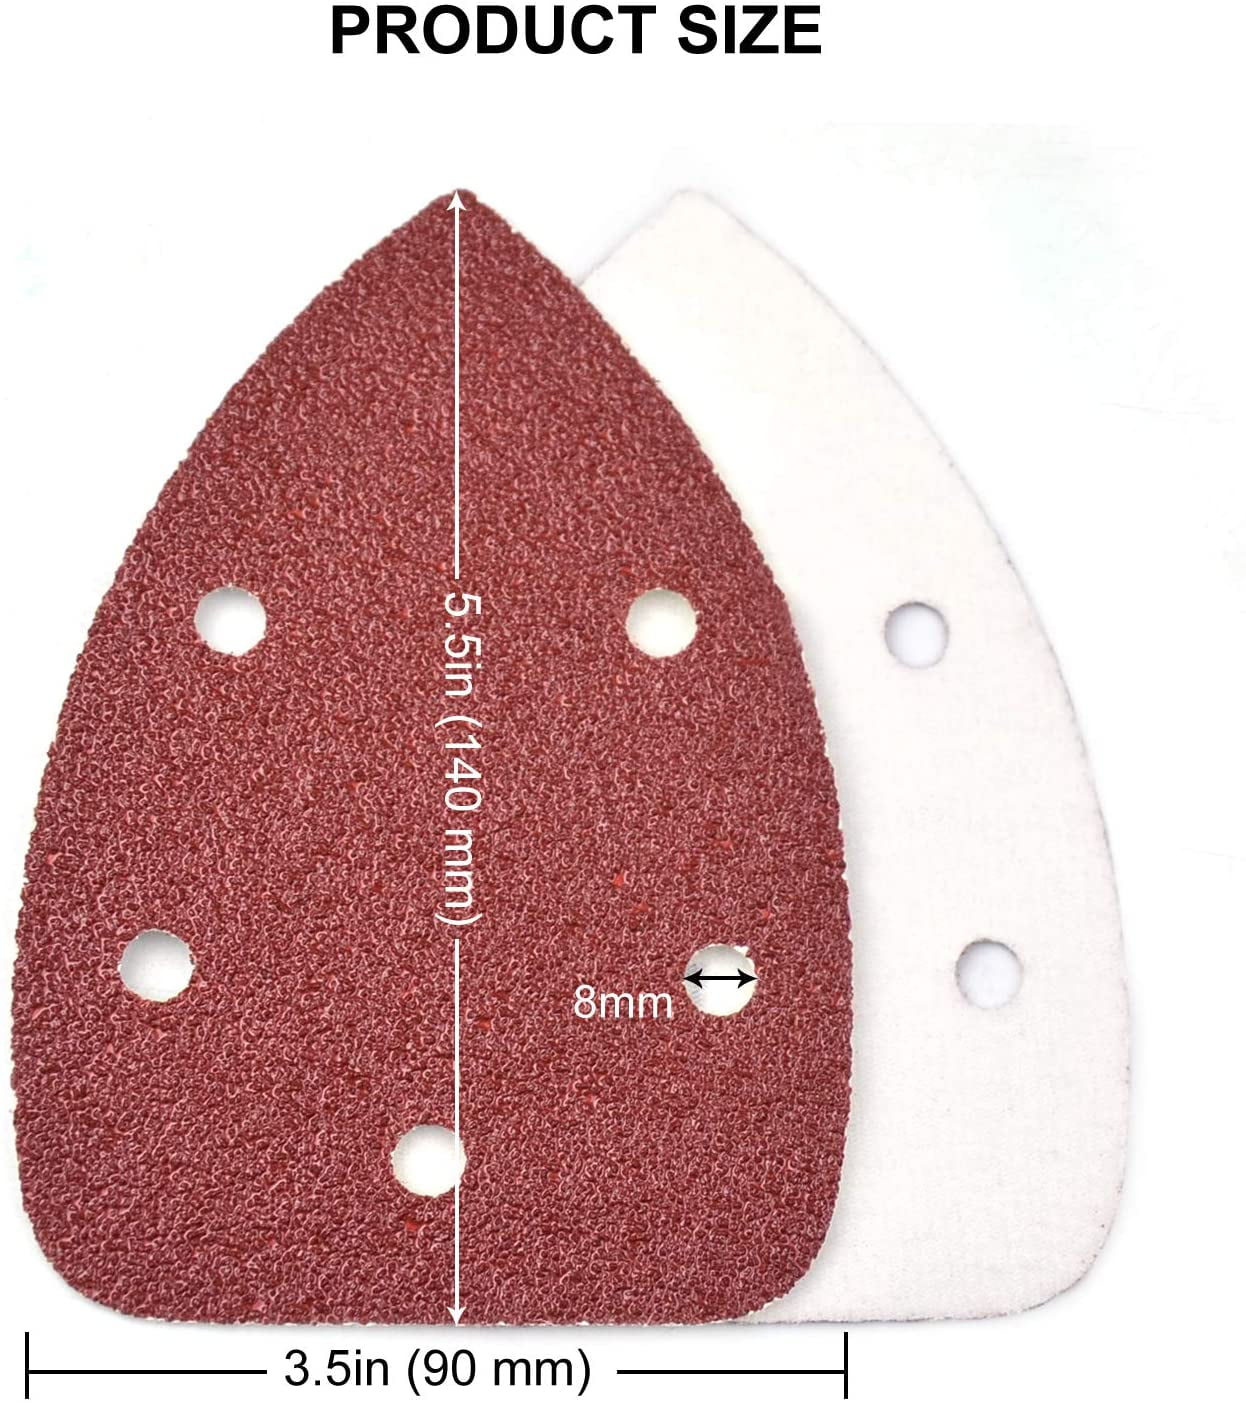 Mouse Detail Sandpaper 70Pcs 12 Hole Mouse Sander Sanding Pads for